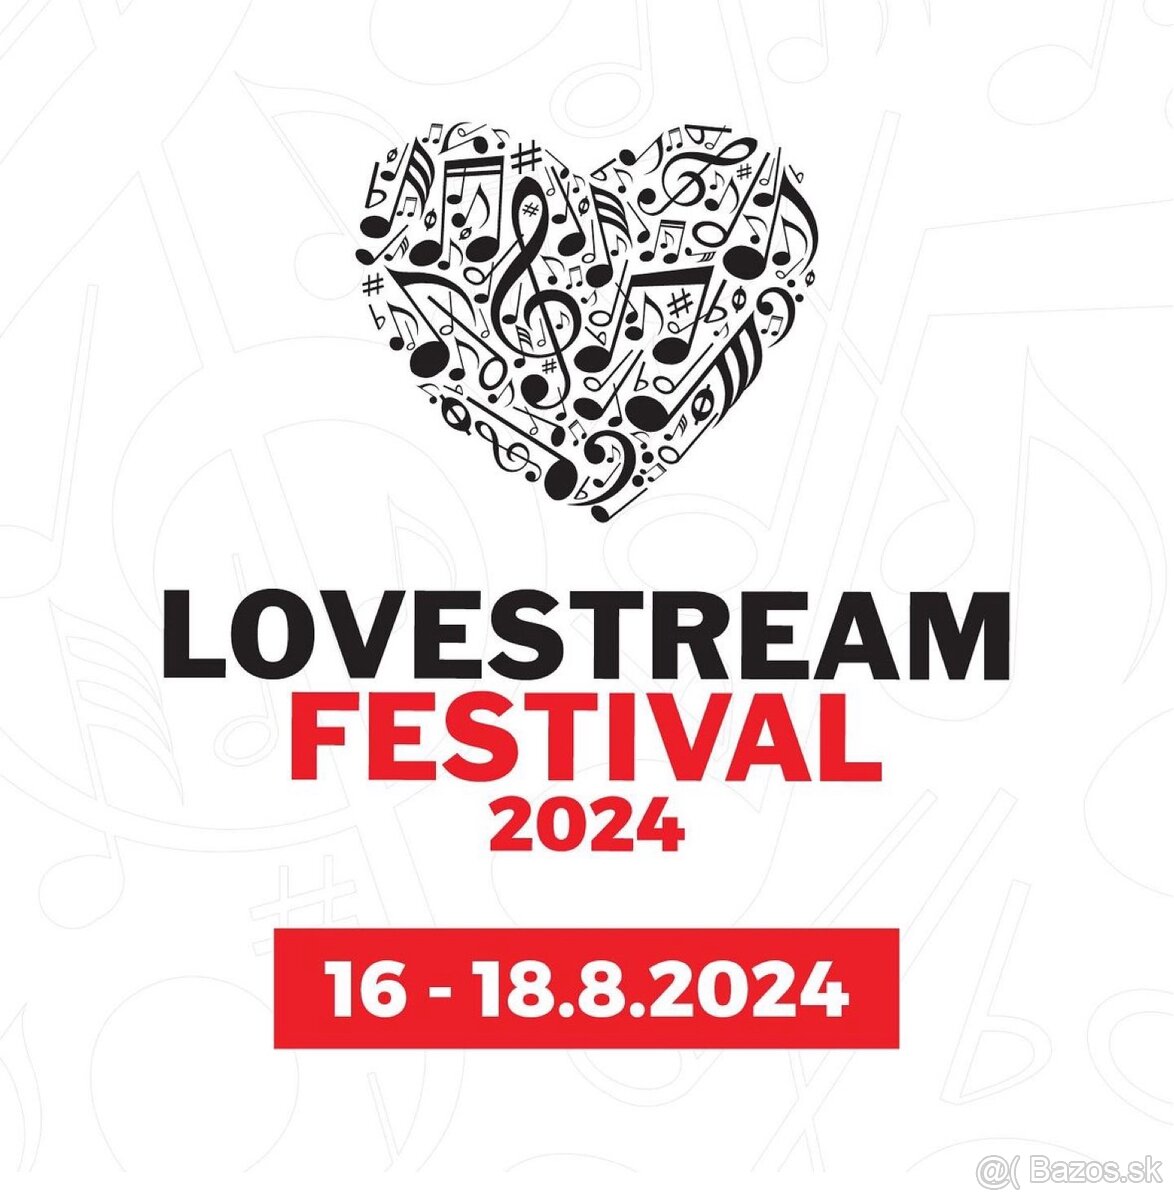 LOVESTREAM festival 2024 Bratislava